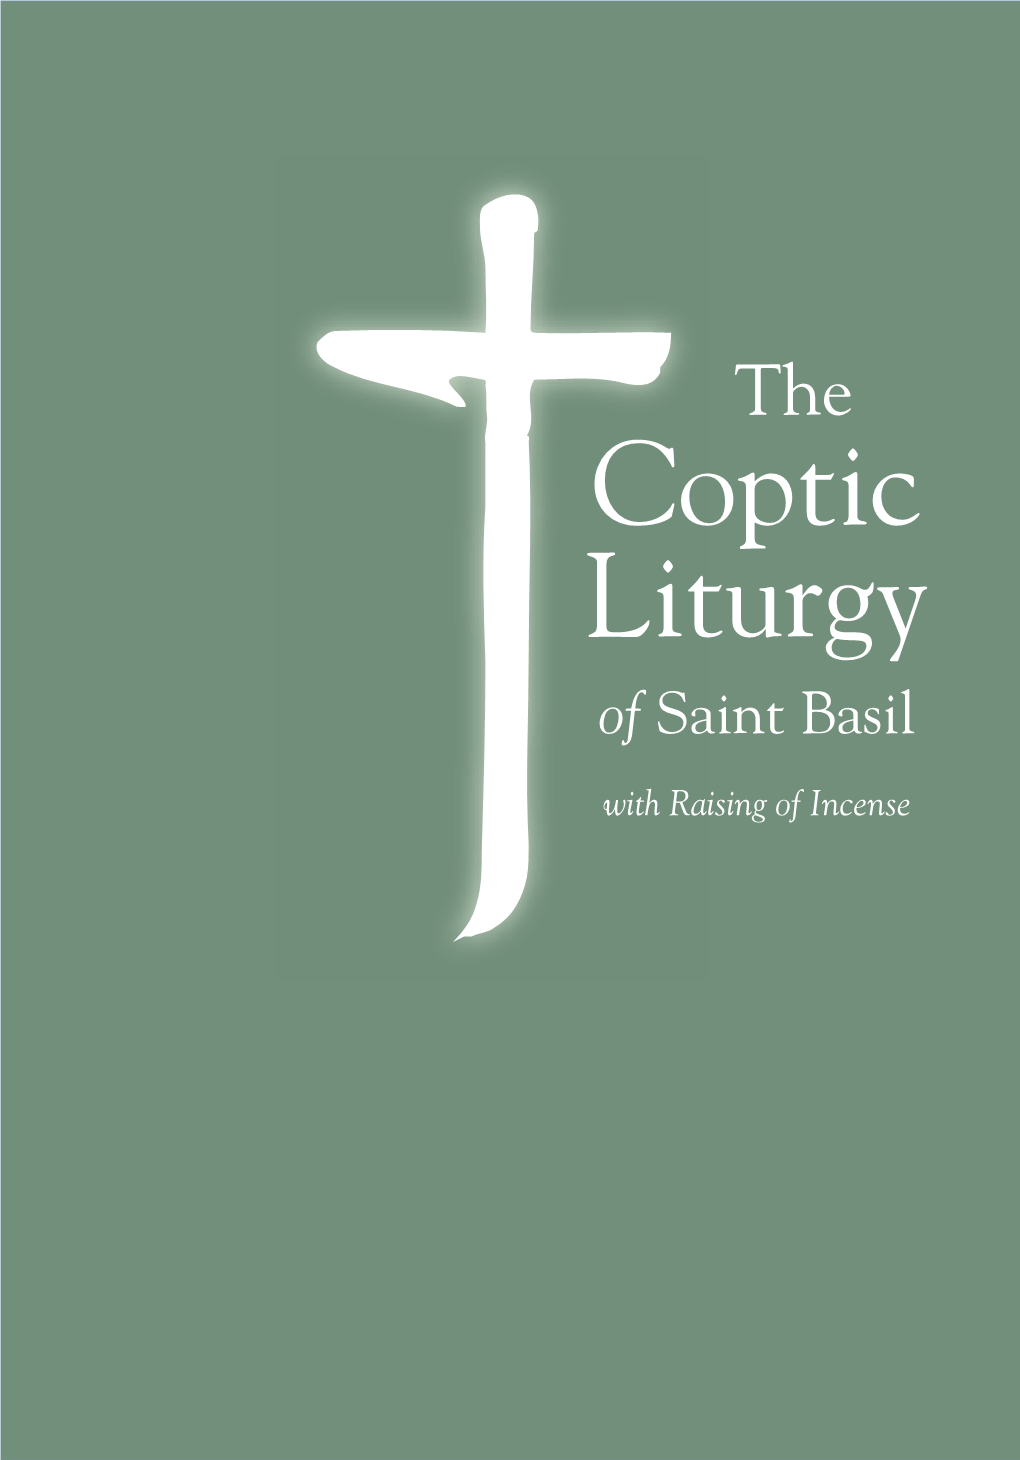 The Coptic Liturgy of Saint Basil with Raising of Incense